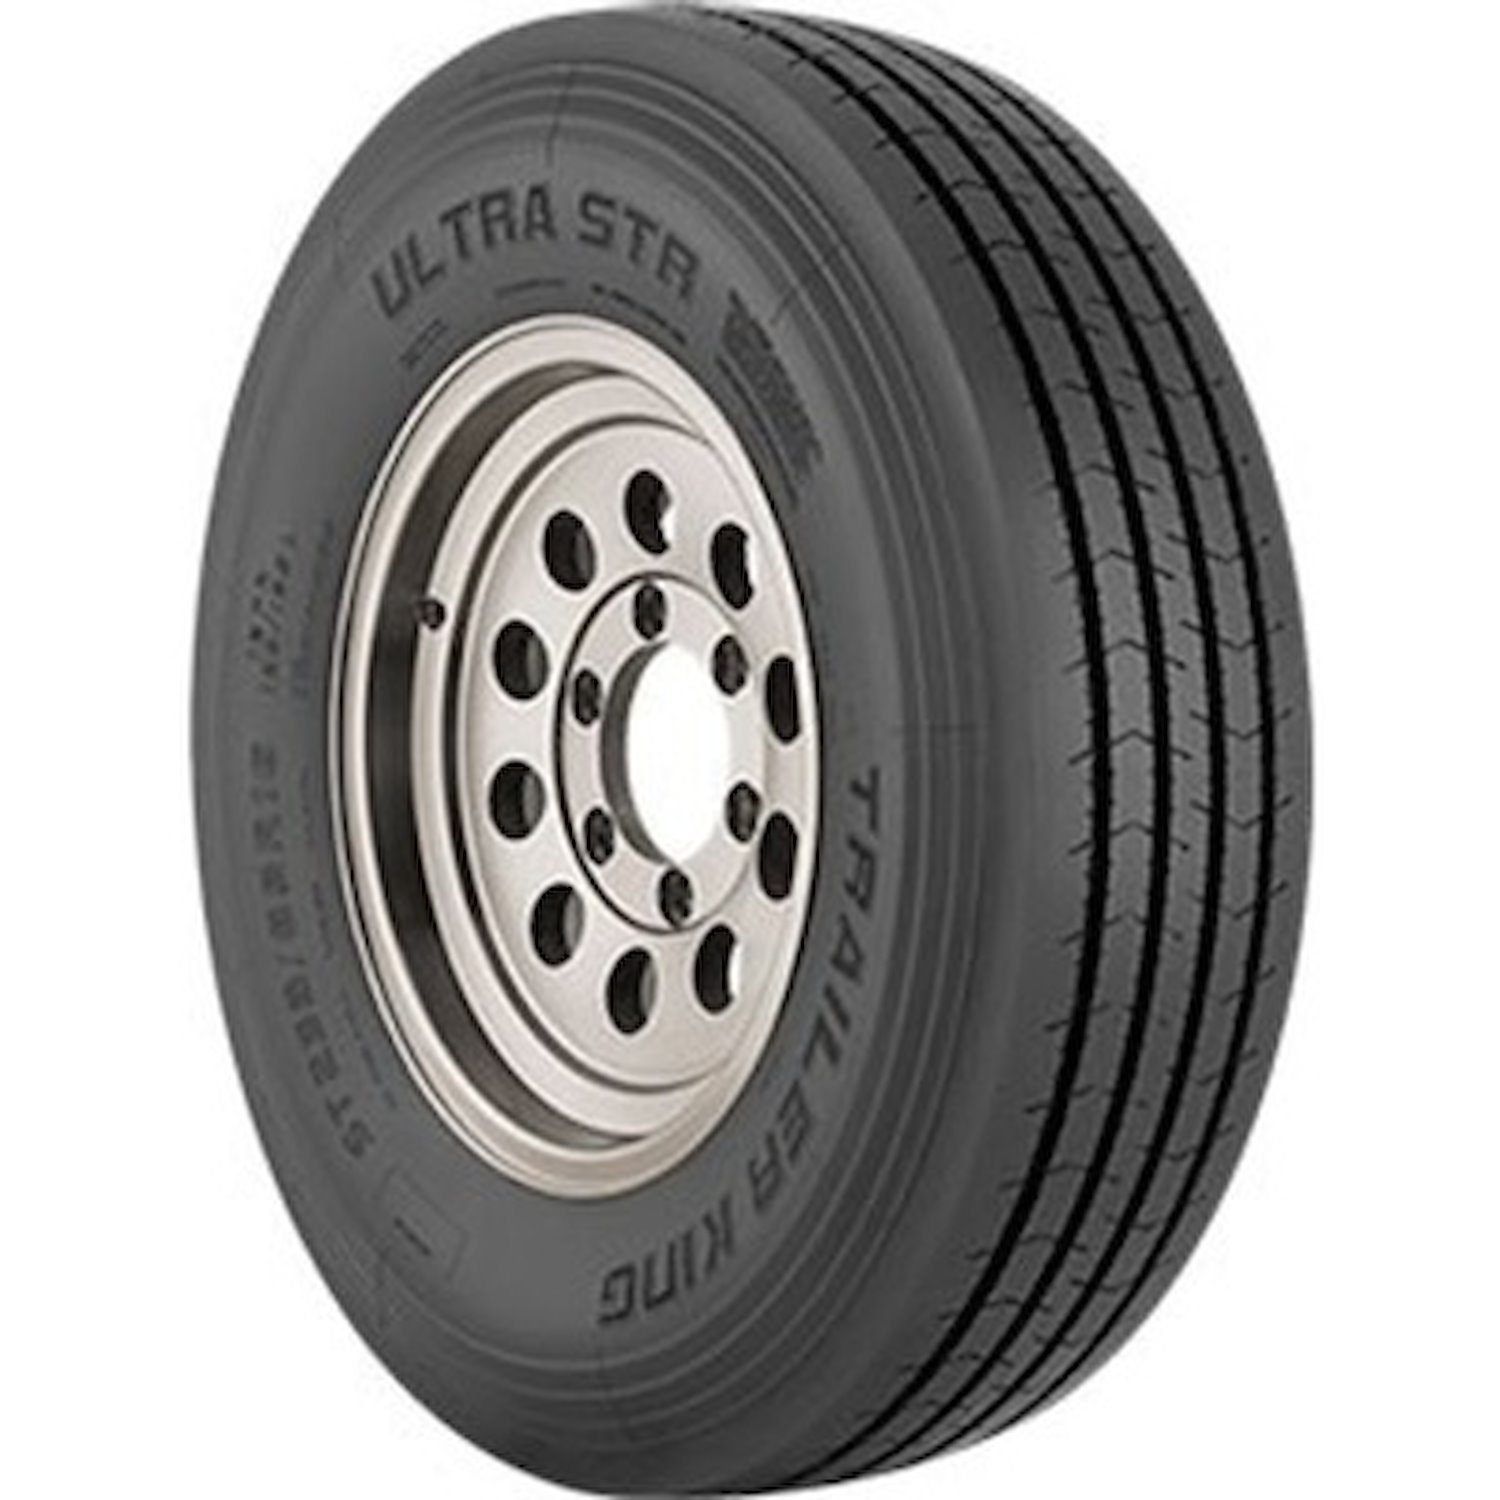 TKAS18G Trailer King Ultra STR Tire, 235/85R16